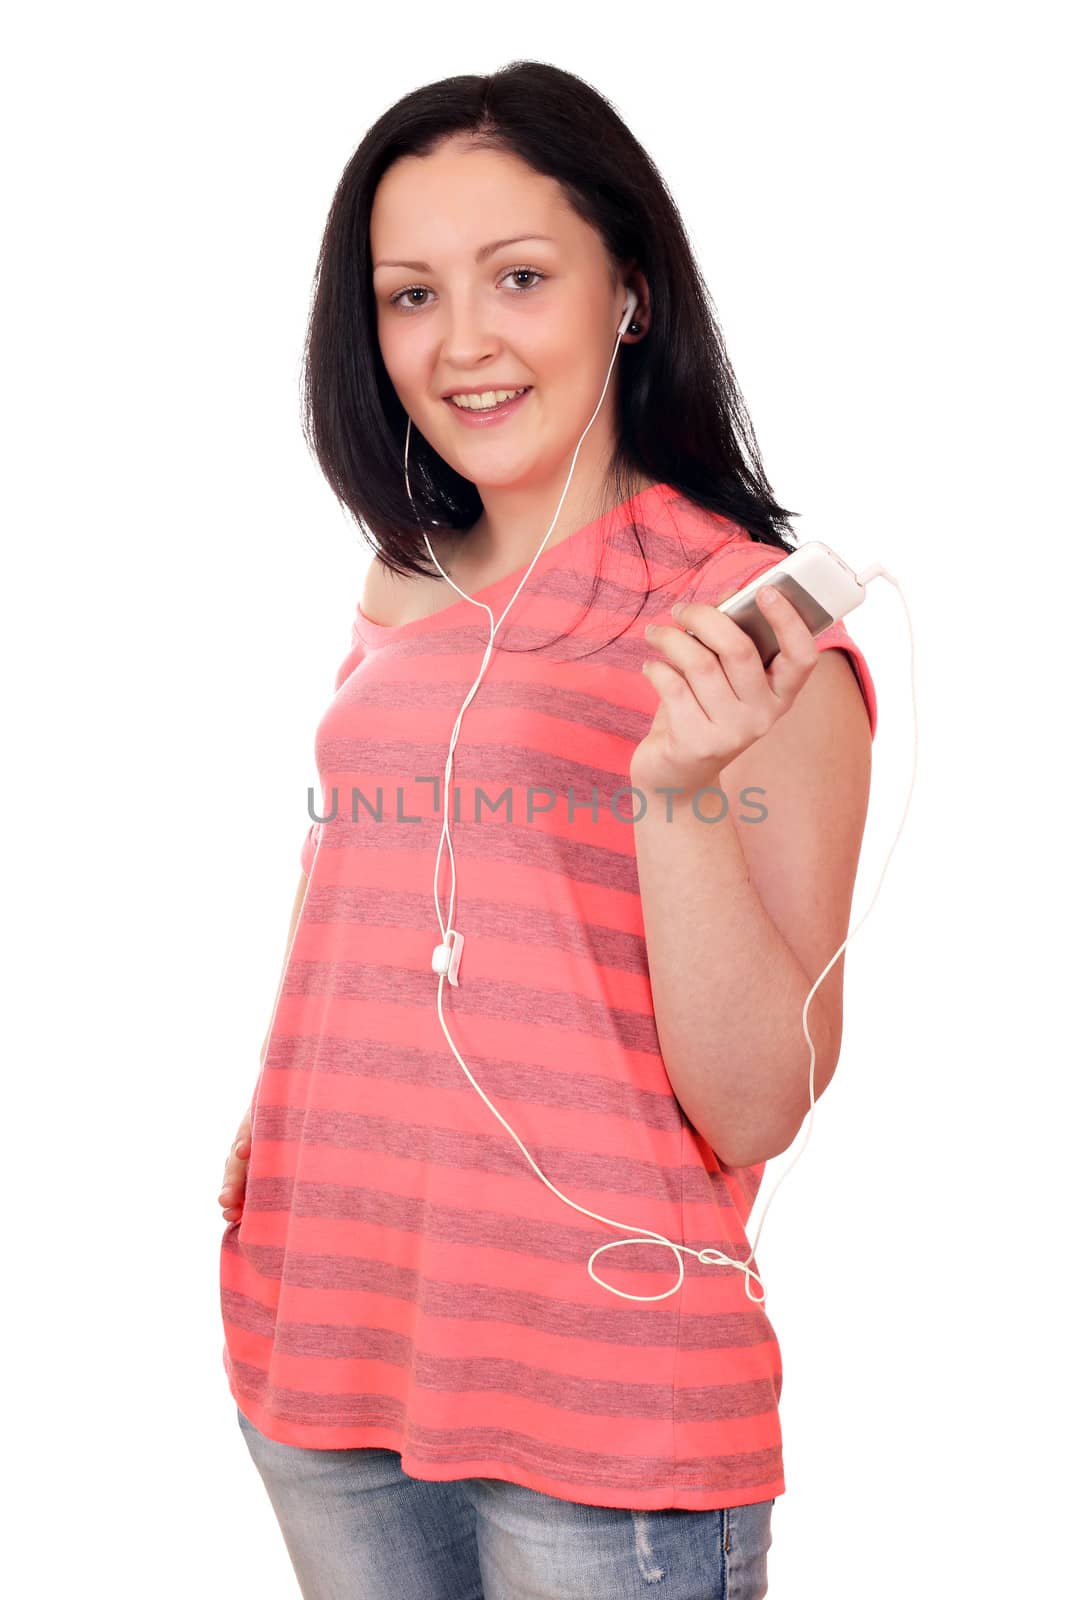 beautiful teenage girl listening music on phone